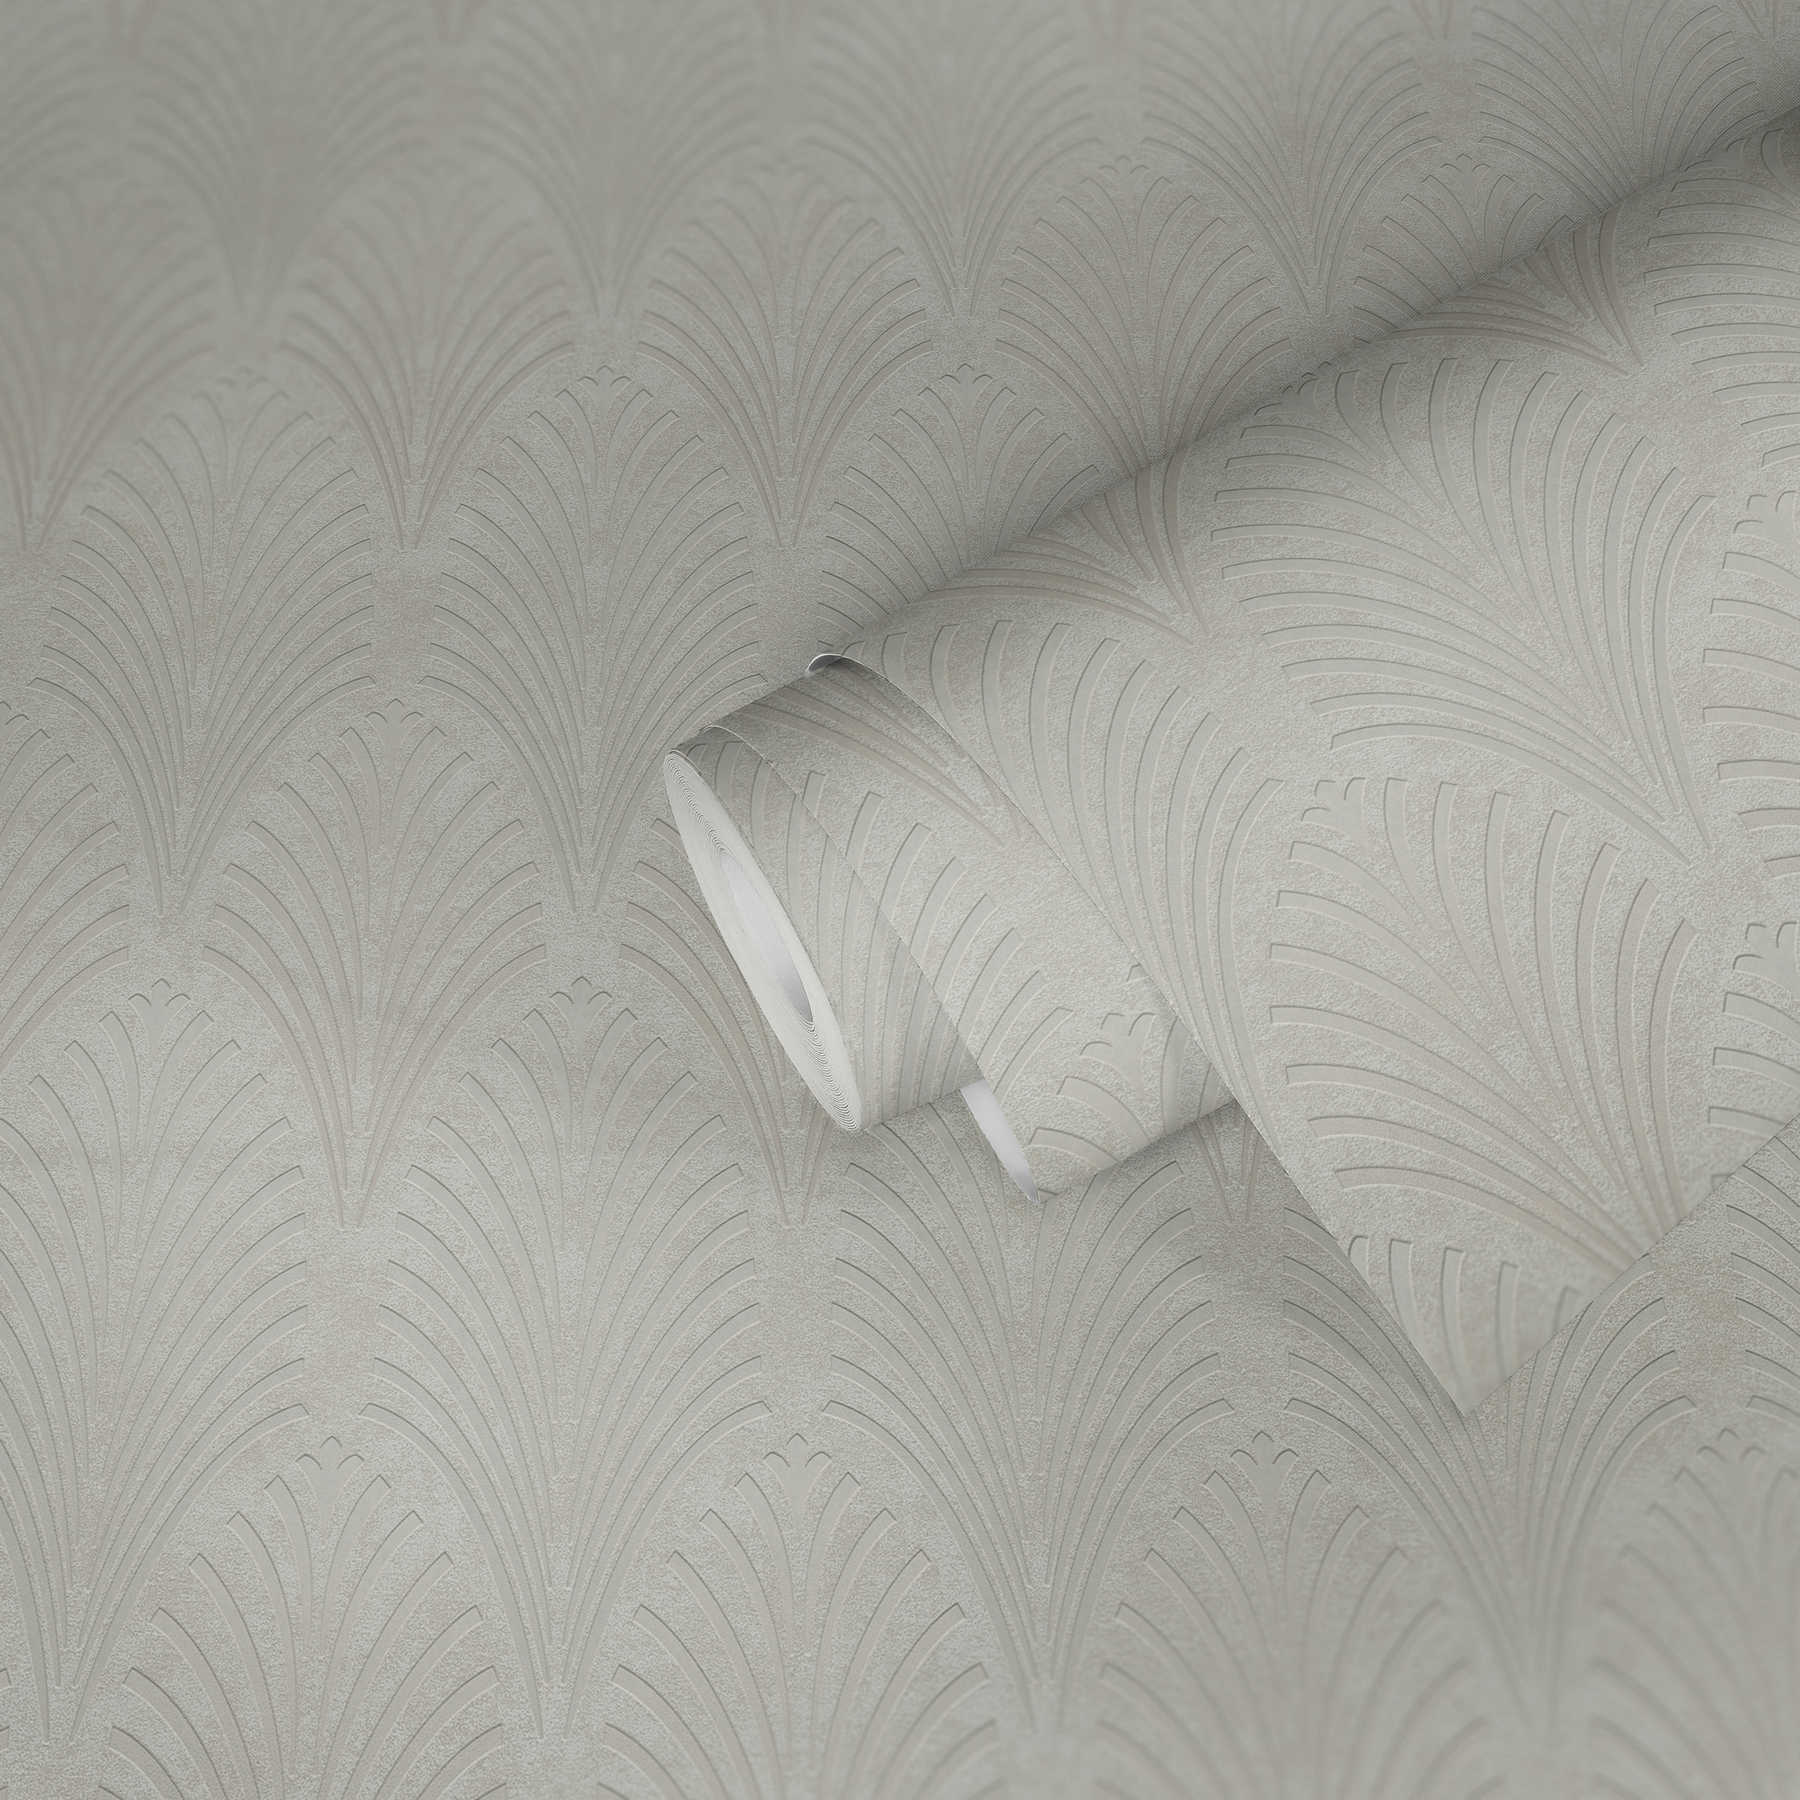             Retro wallpaper Art Deco style with geometric pattern - cream, grey, beige
        